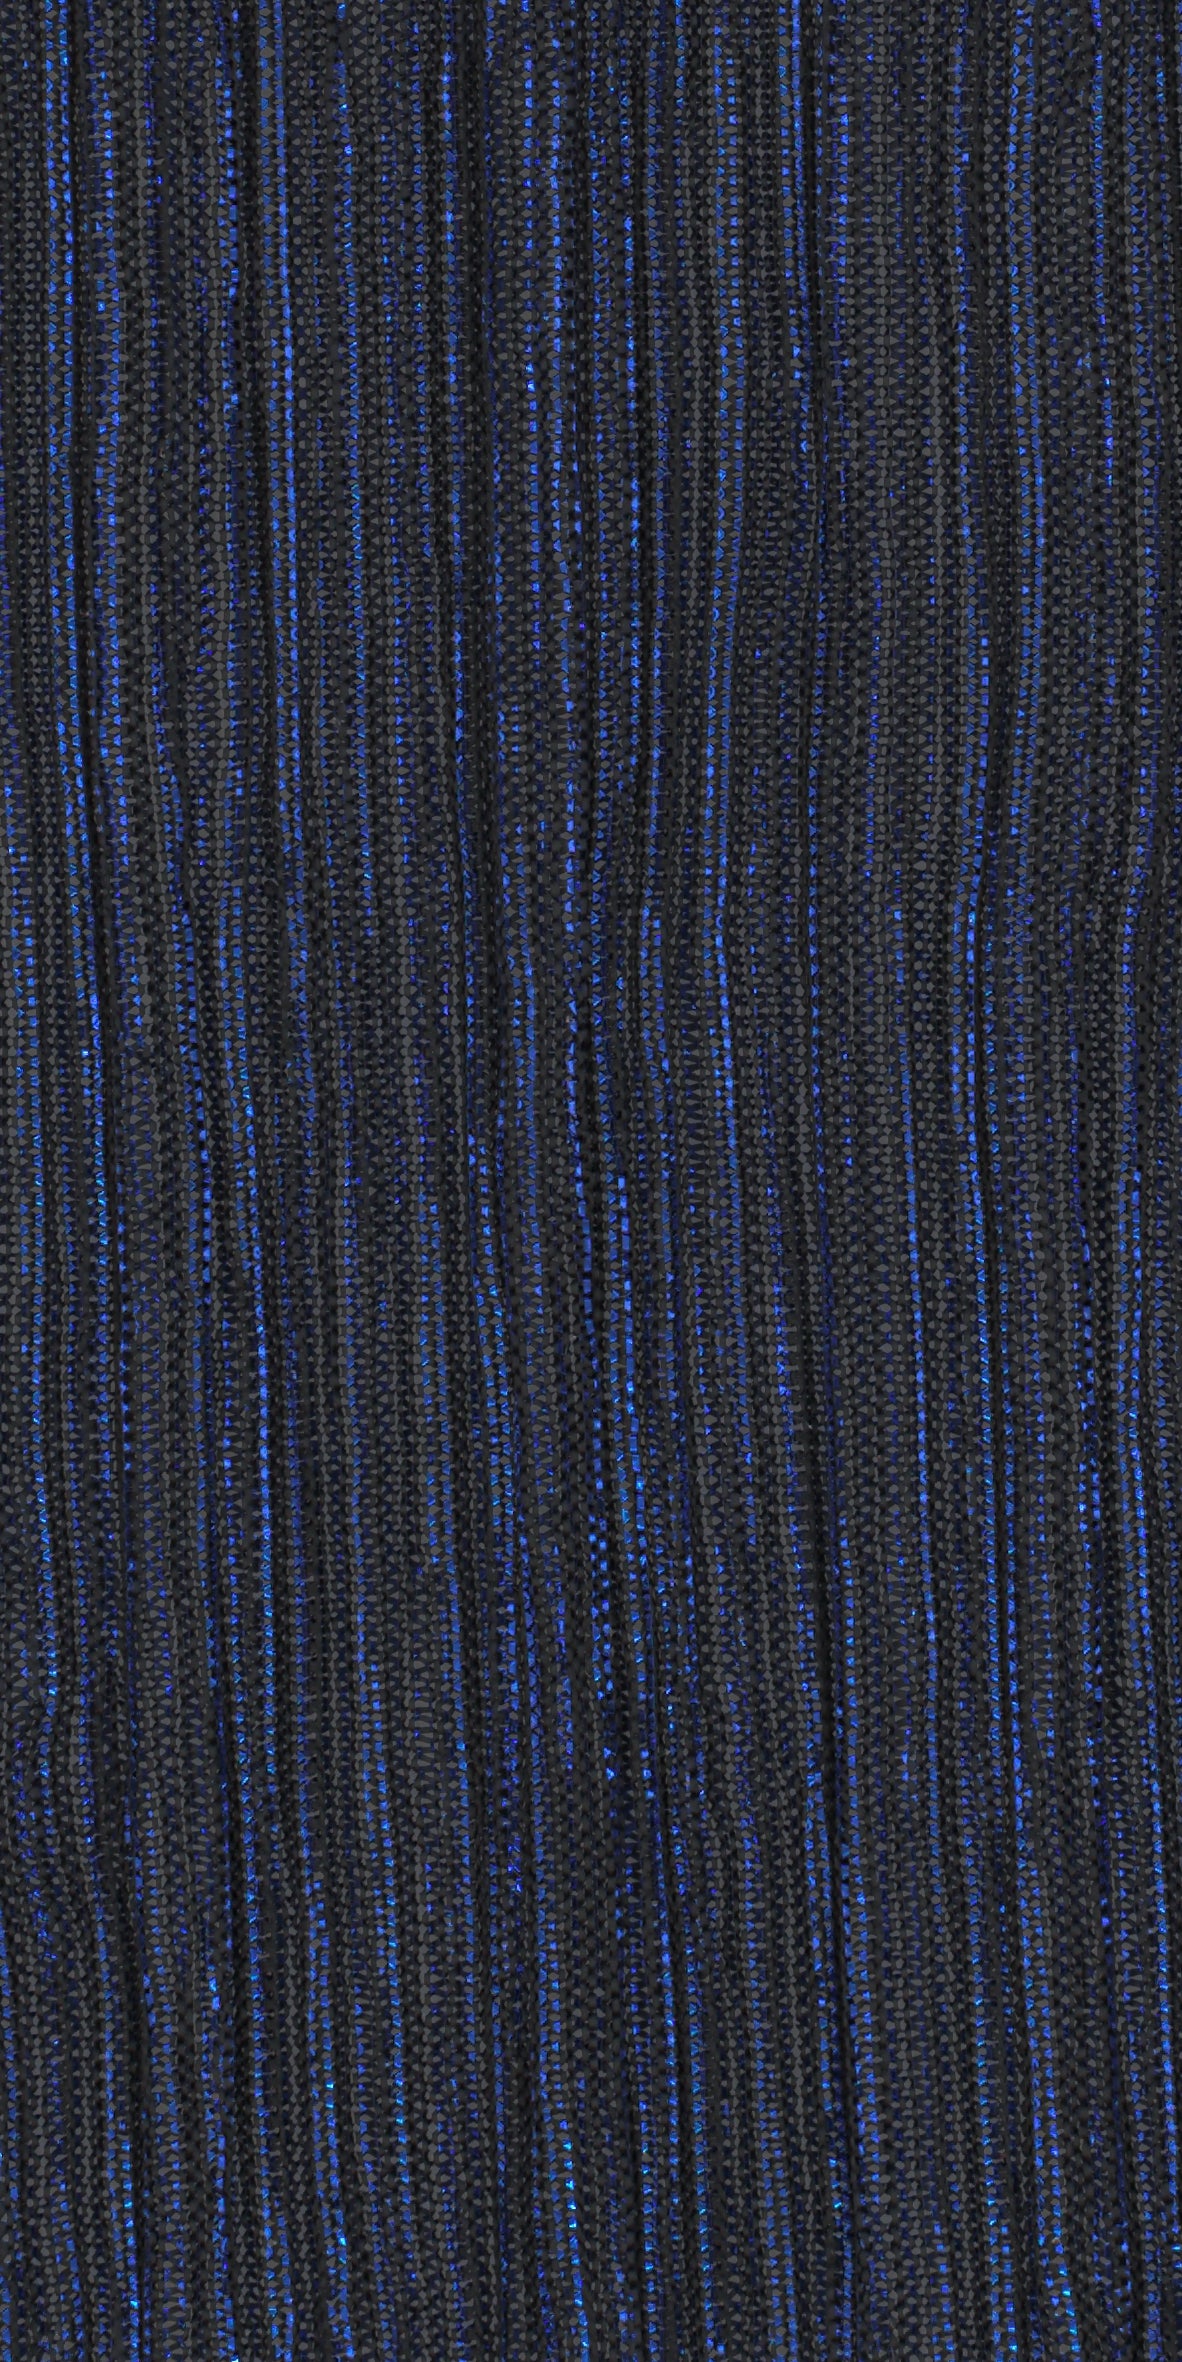 12006-17 Navy Electric Blue Metallic Pleat Plain Dyed Blend 126g/yd 56" blend blue knit metallic plain dyed pleat ppl new Metallic, Pleat - knit fabric - woven fabric - fabric company - fabric wholesale - fabric b2b - fabric factory - high quality fabric - hong kong fabric - fabric hk - acetate fabric - cotton fabric - linen fabric - metallic fabric - nylon fabric - polyester fabric - spandex fabric - chun wing hing - cwh hk - fabric worldwide ship - 針織布 - 梳織布 - 布料公司- 布料批發 - 香港布料 - 秦榮興